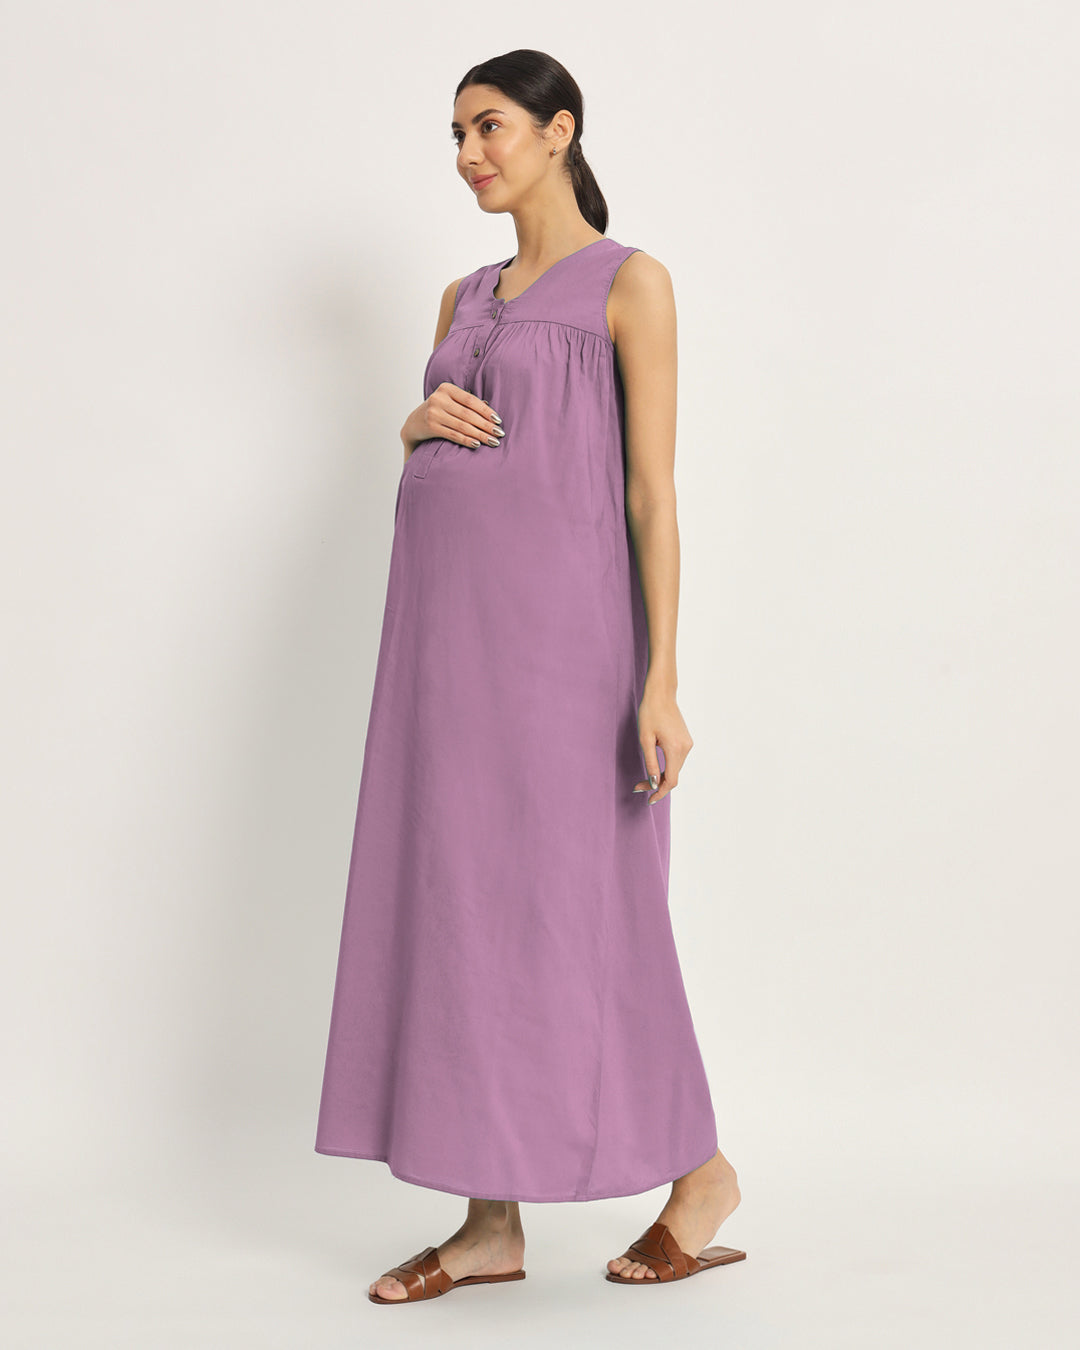 Combo: Iris Pink & Sage Green Mommylicious Maternity & Nursing Dress